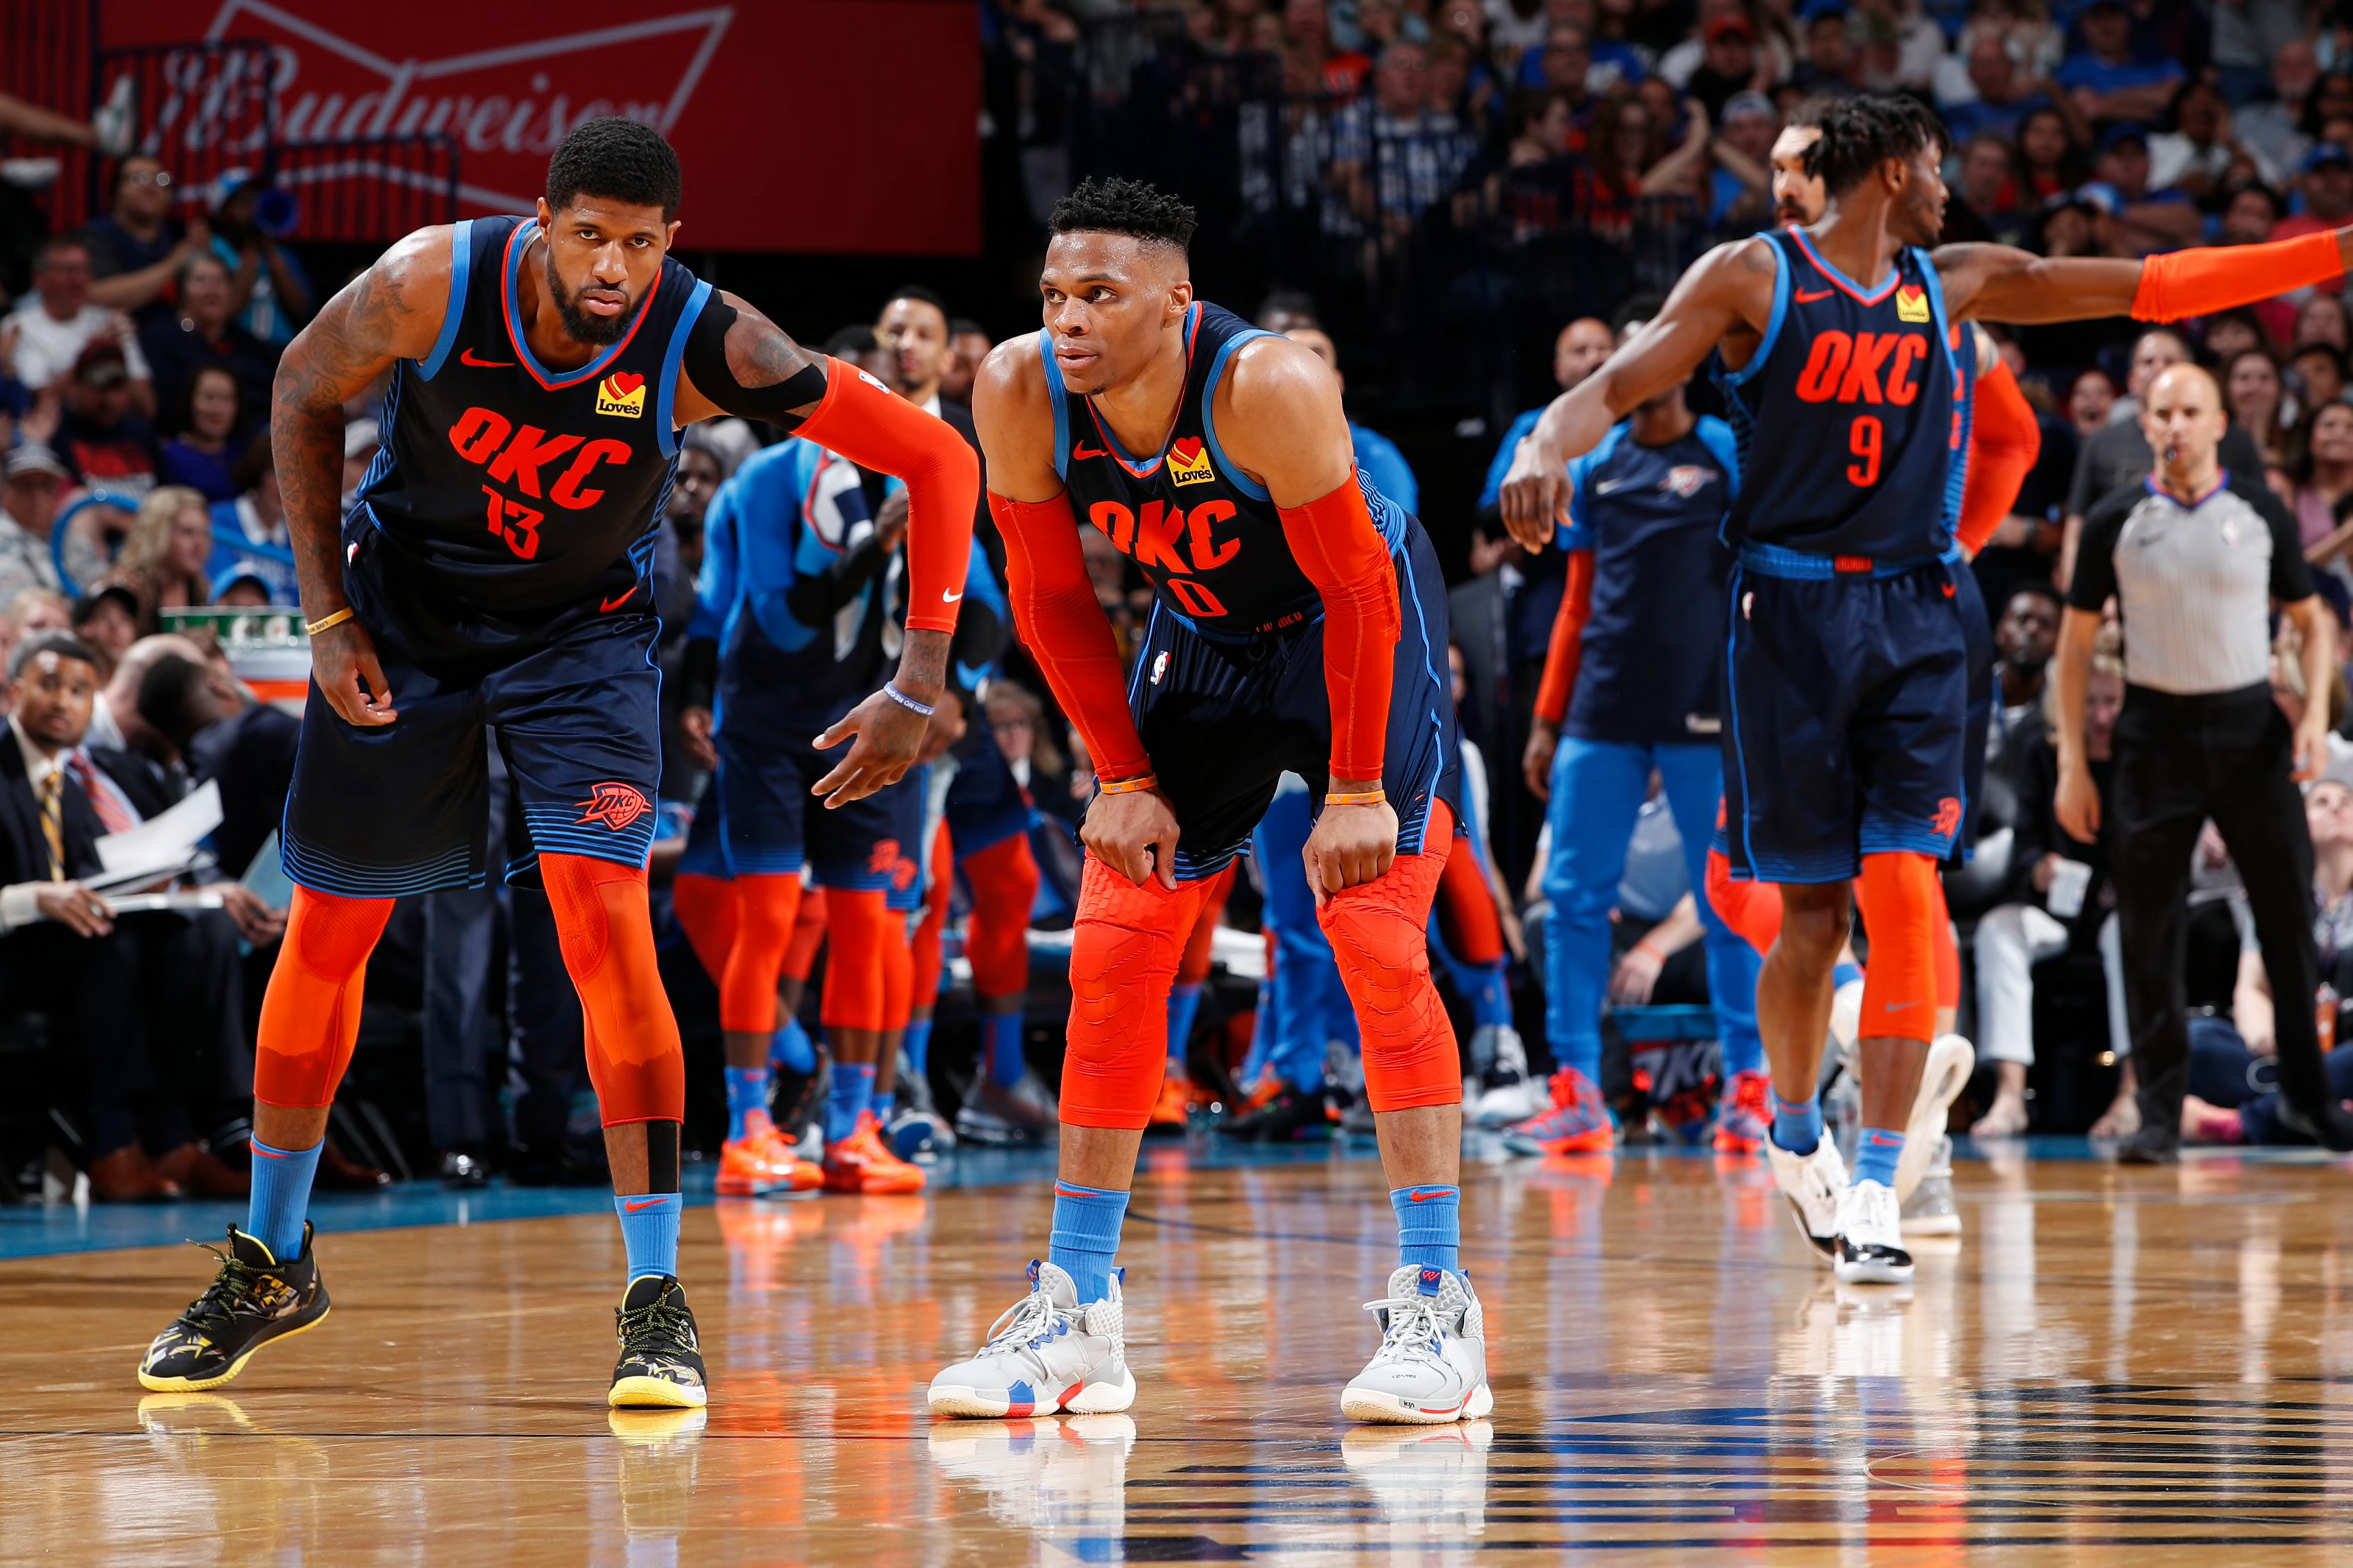 Oklahoma City Thunder: Complete grades for the 2019 NBA offseason